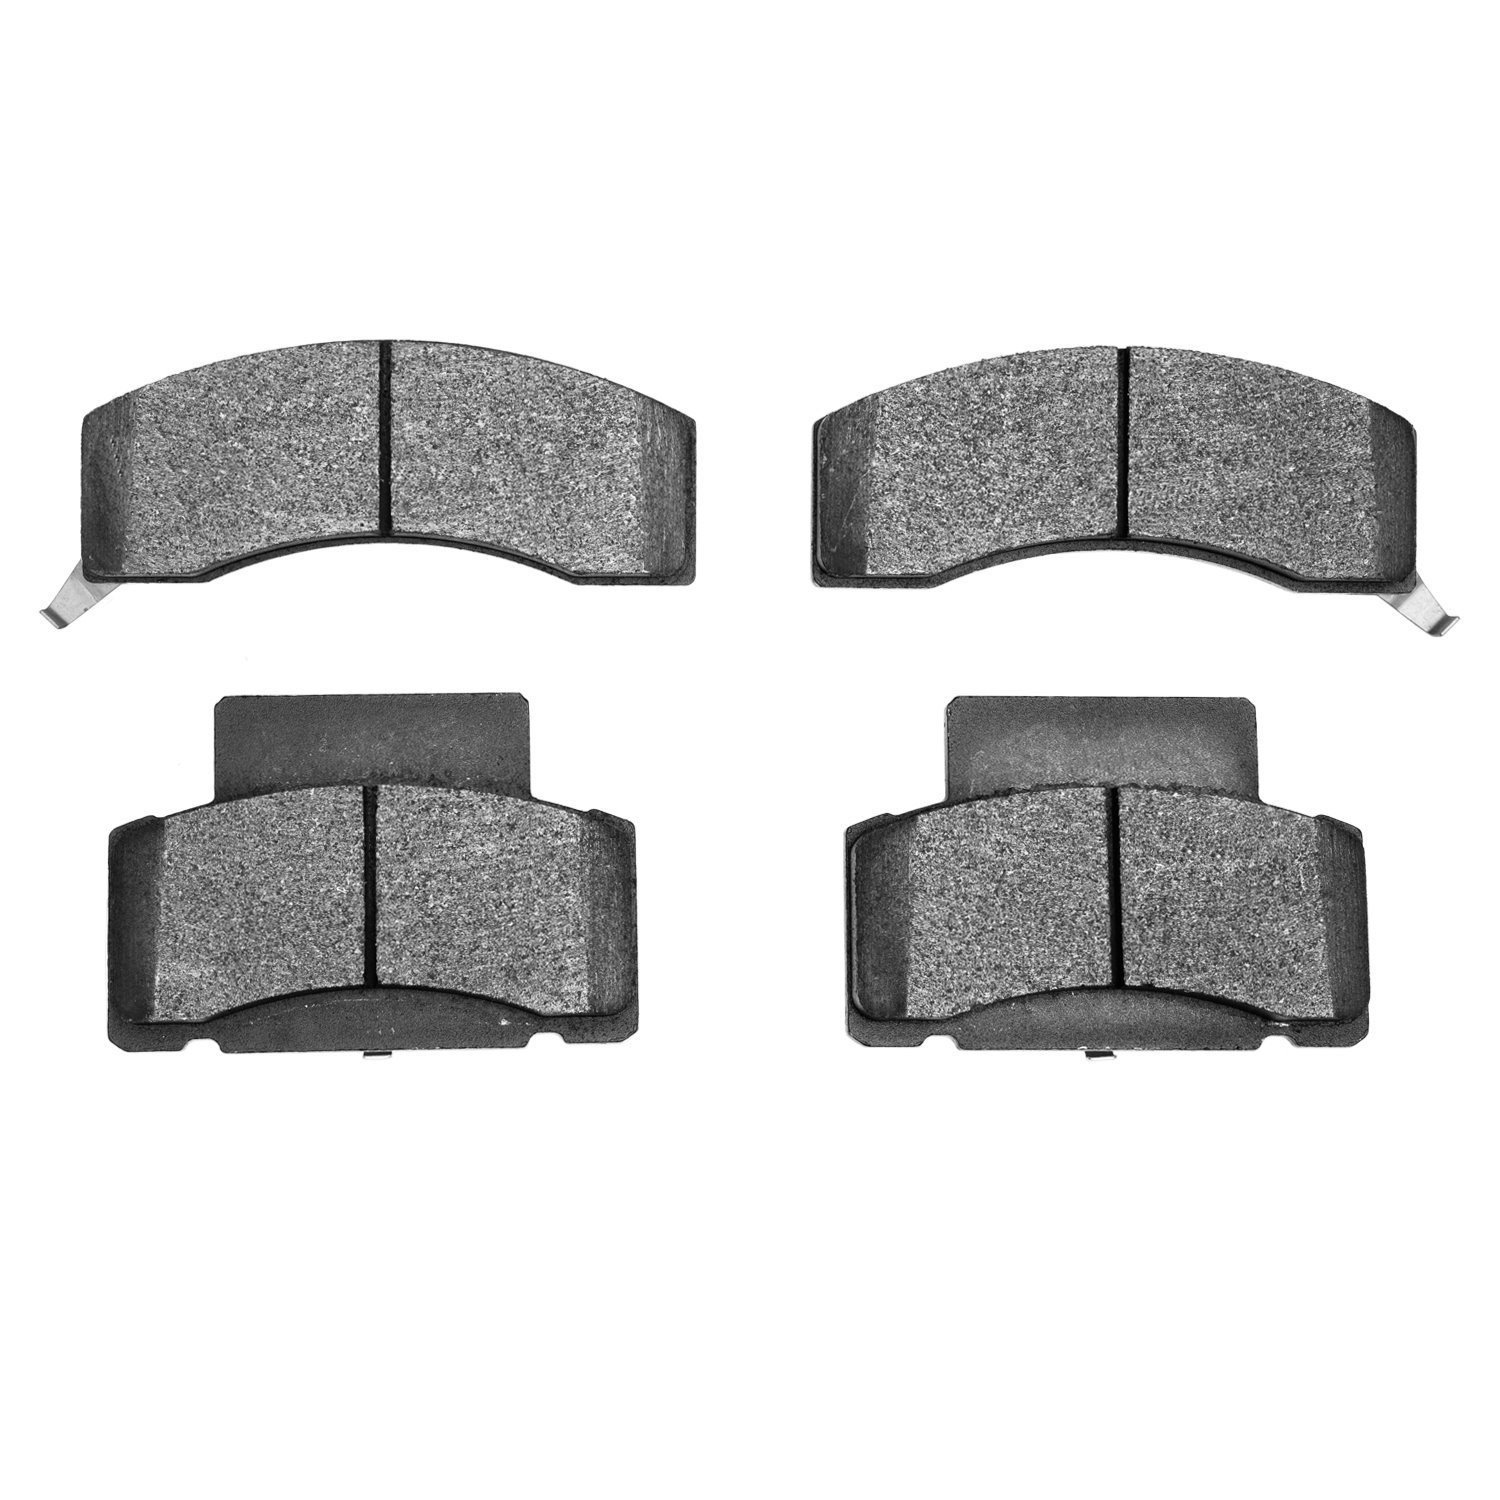 1310-0459-00 3000-Series Ceramic Brake Pads, 1990-2002 Multiple Makes/Models, Position: Front